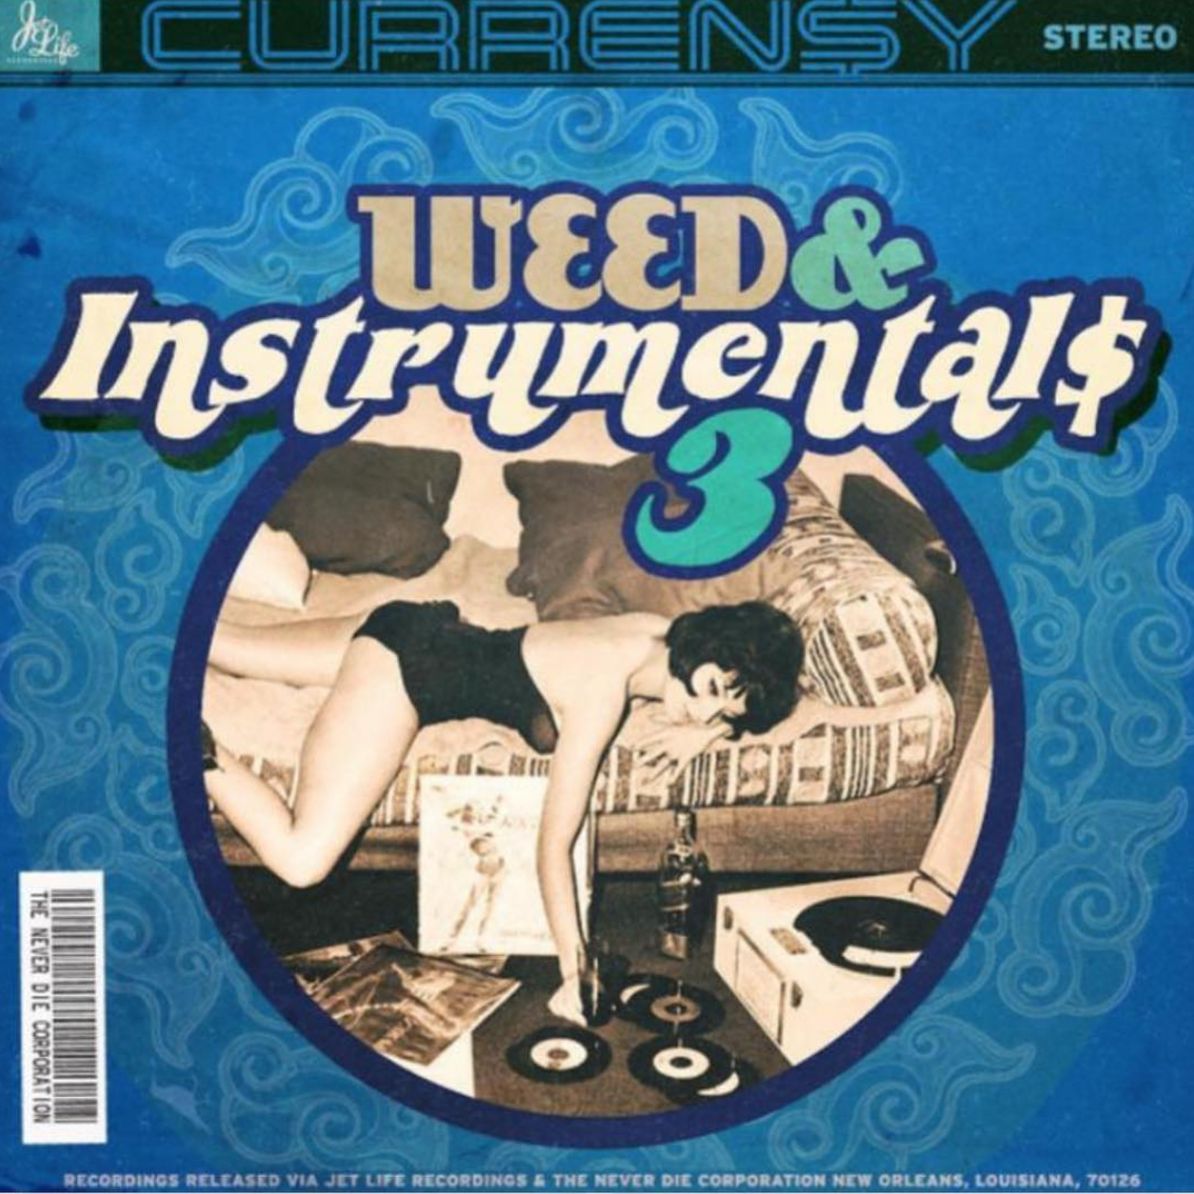 Curren$y – Weed & Instrumentals 3 [Mixtape]